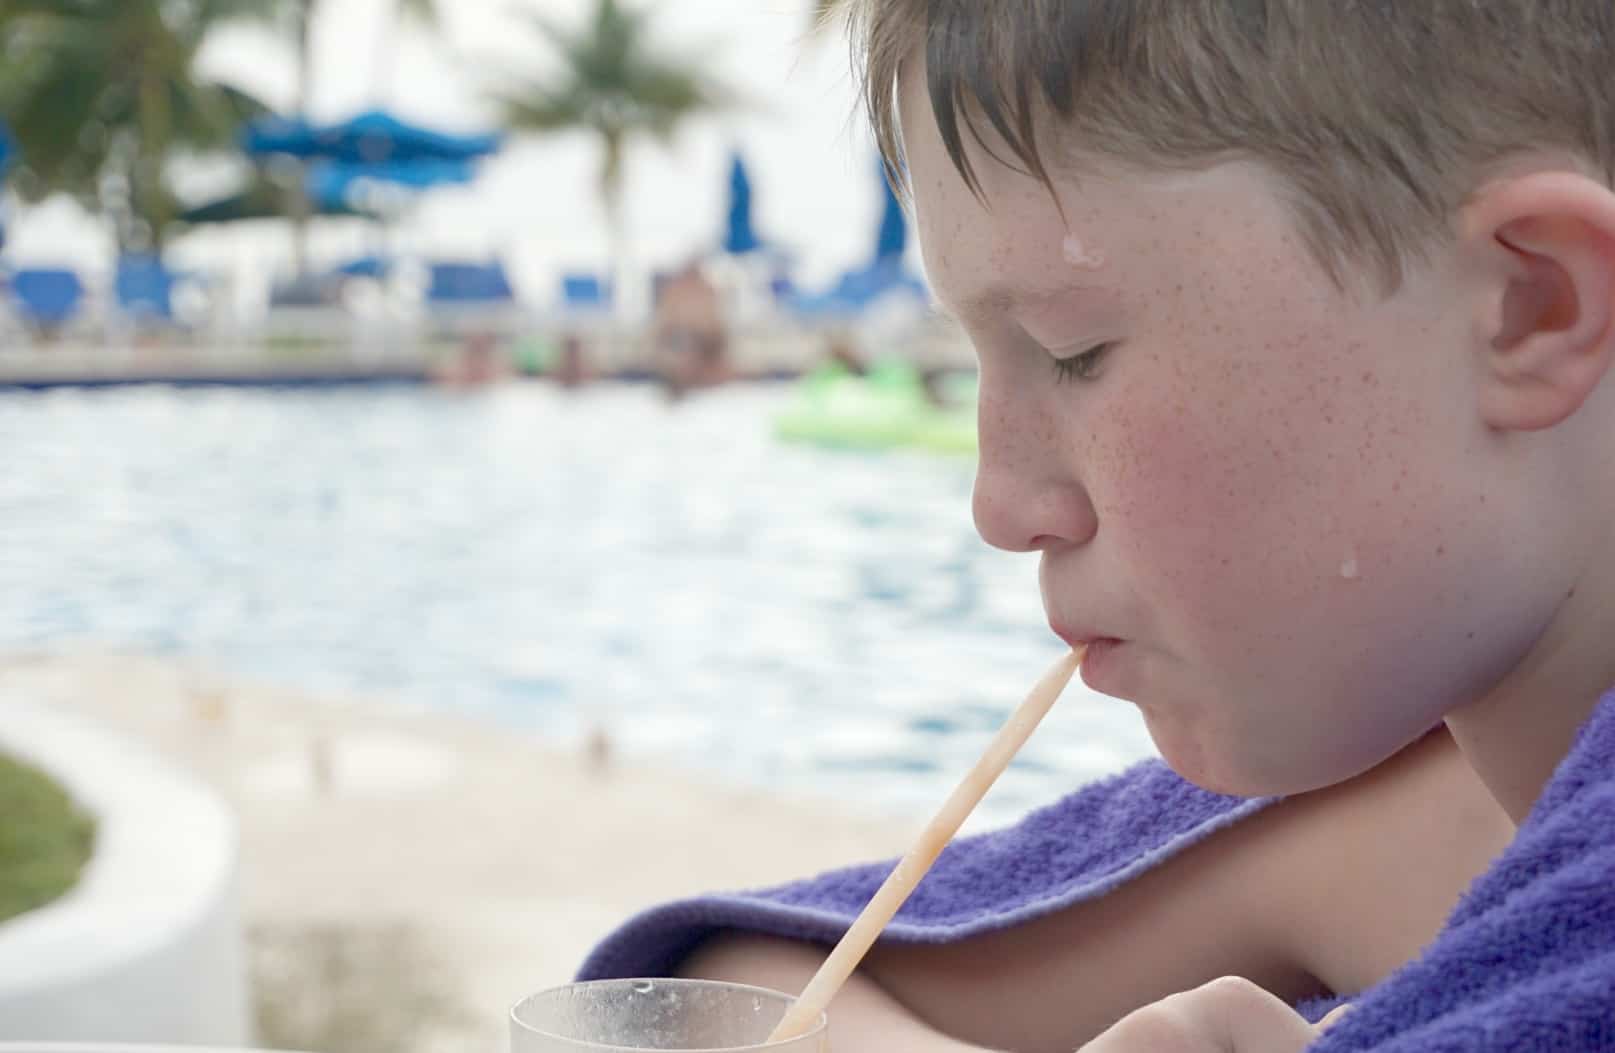 Drinking smoothies around the pool at Elite Island Resorts